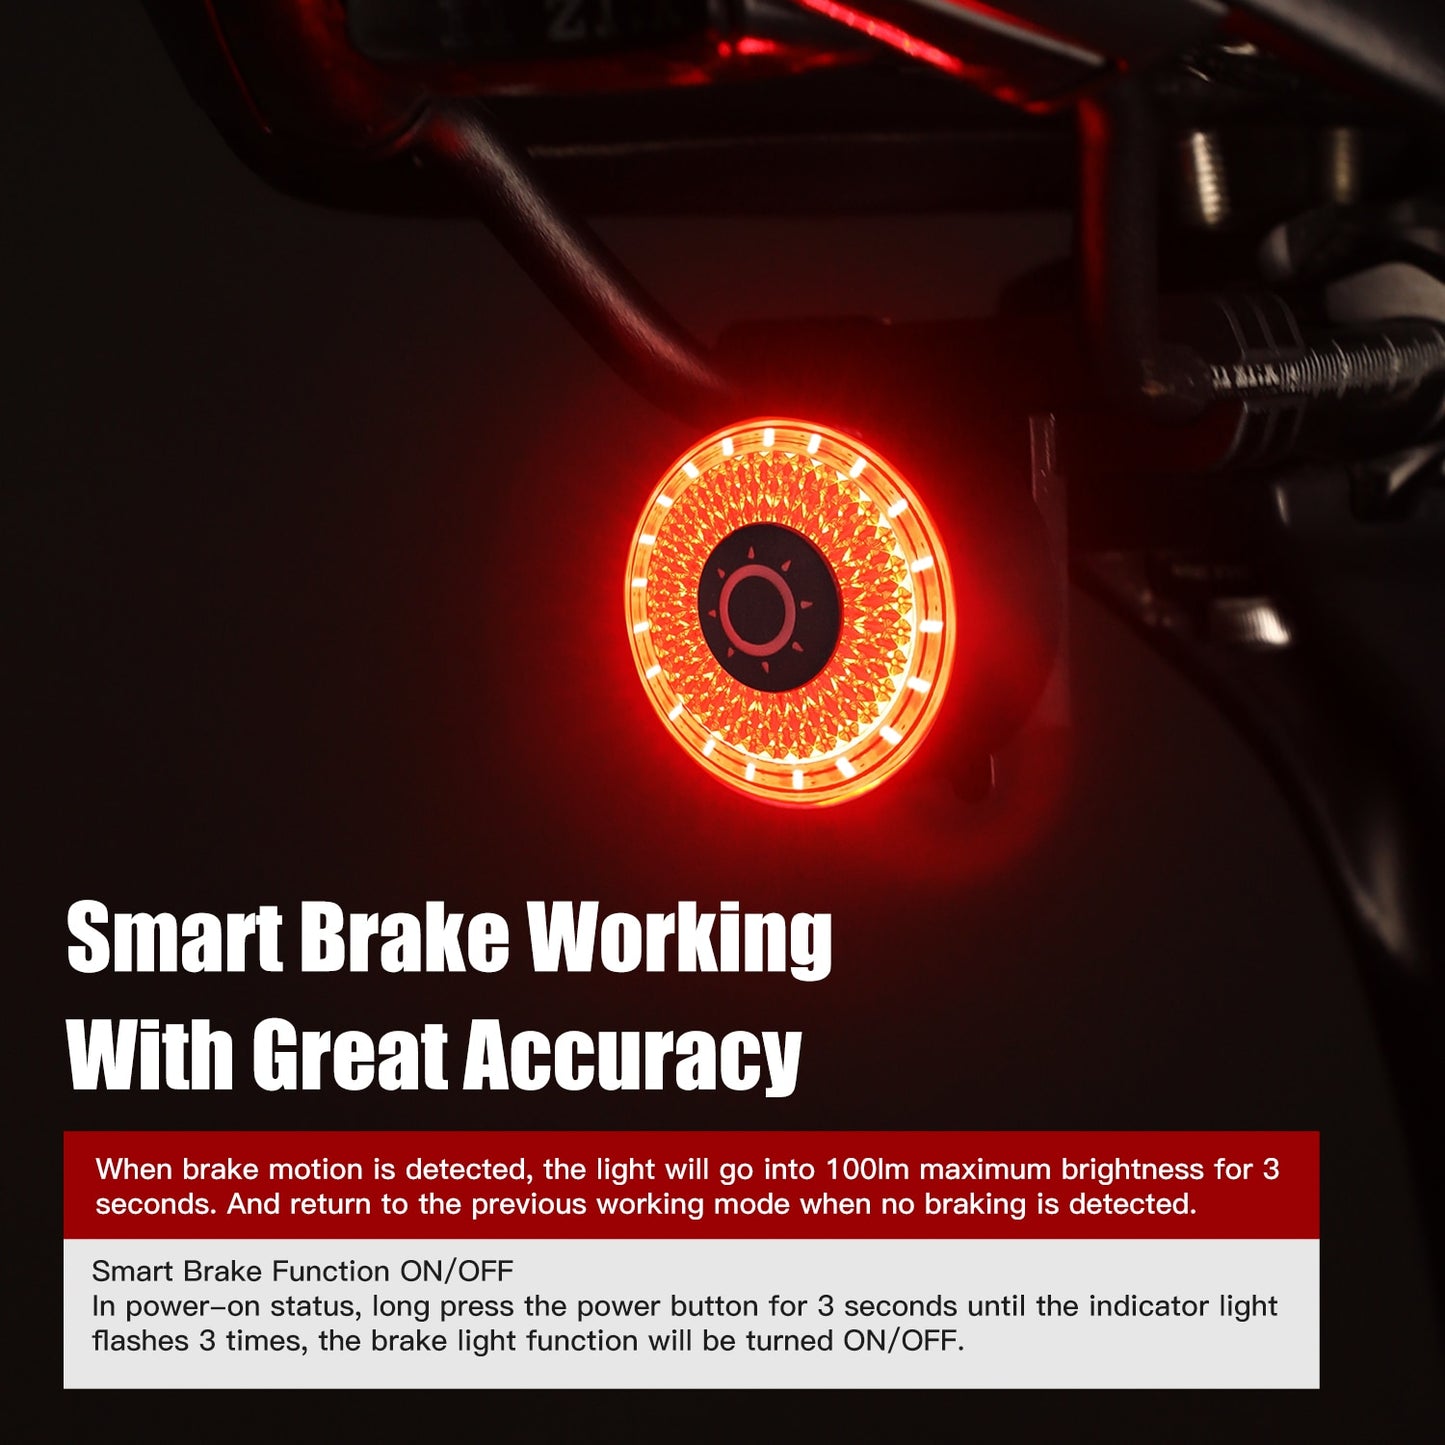 smart brake function turns on/off when brake motion is detected .